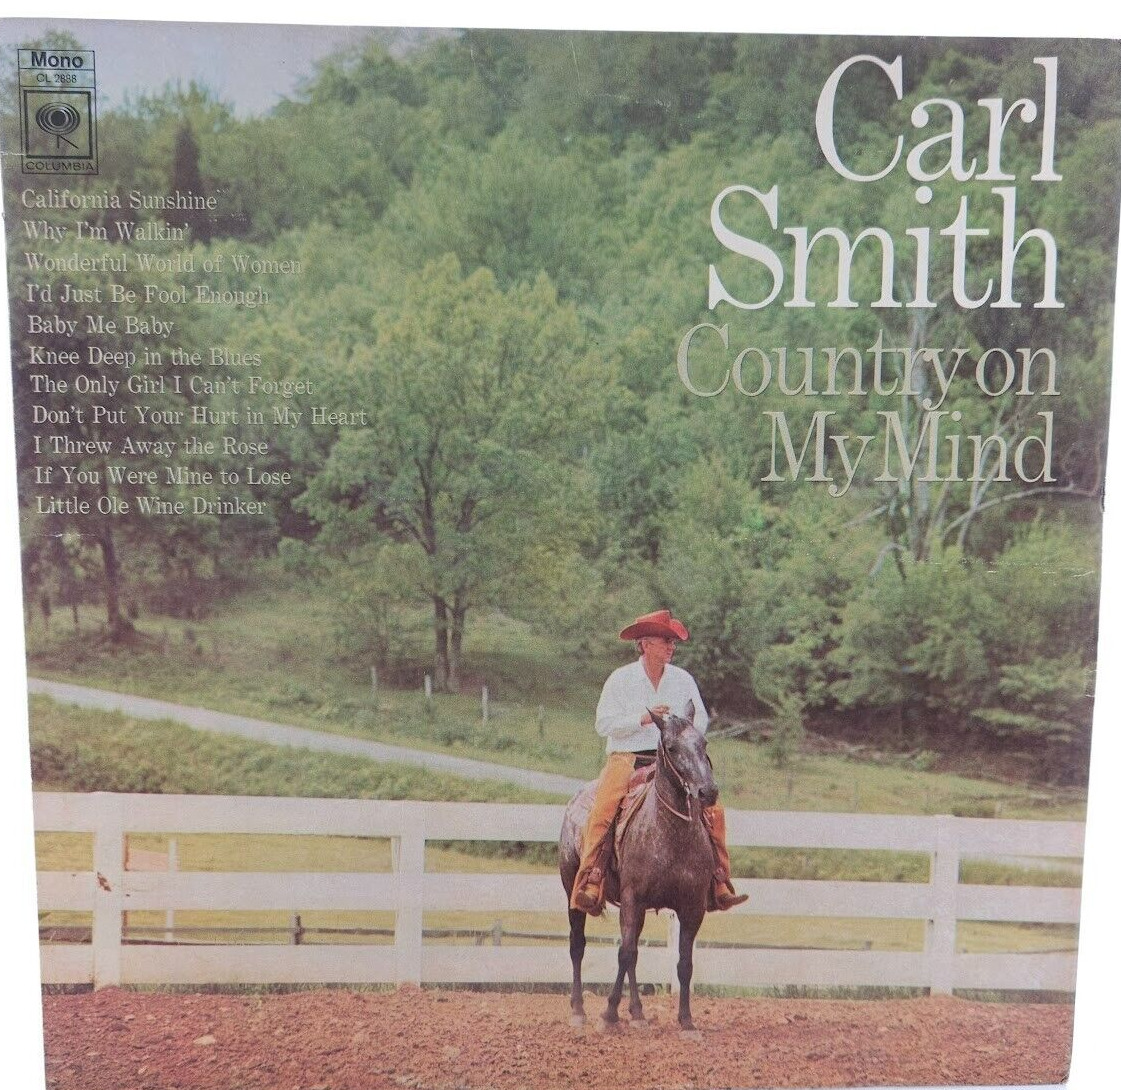 Carl Smith Country On My Mind Album Vinyl 1968 Columbia Records Mono CL-2888